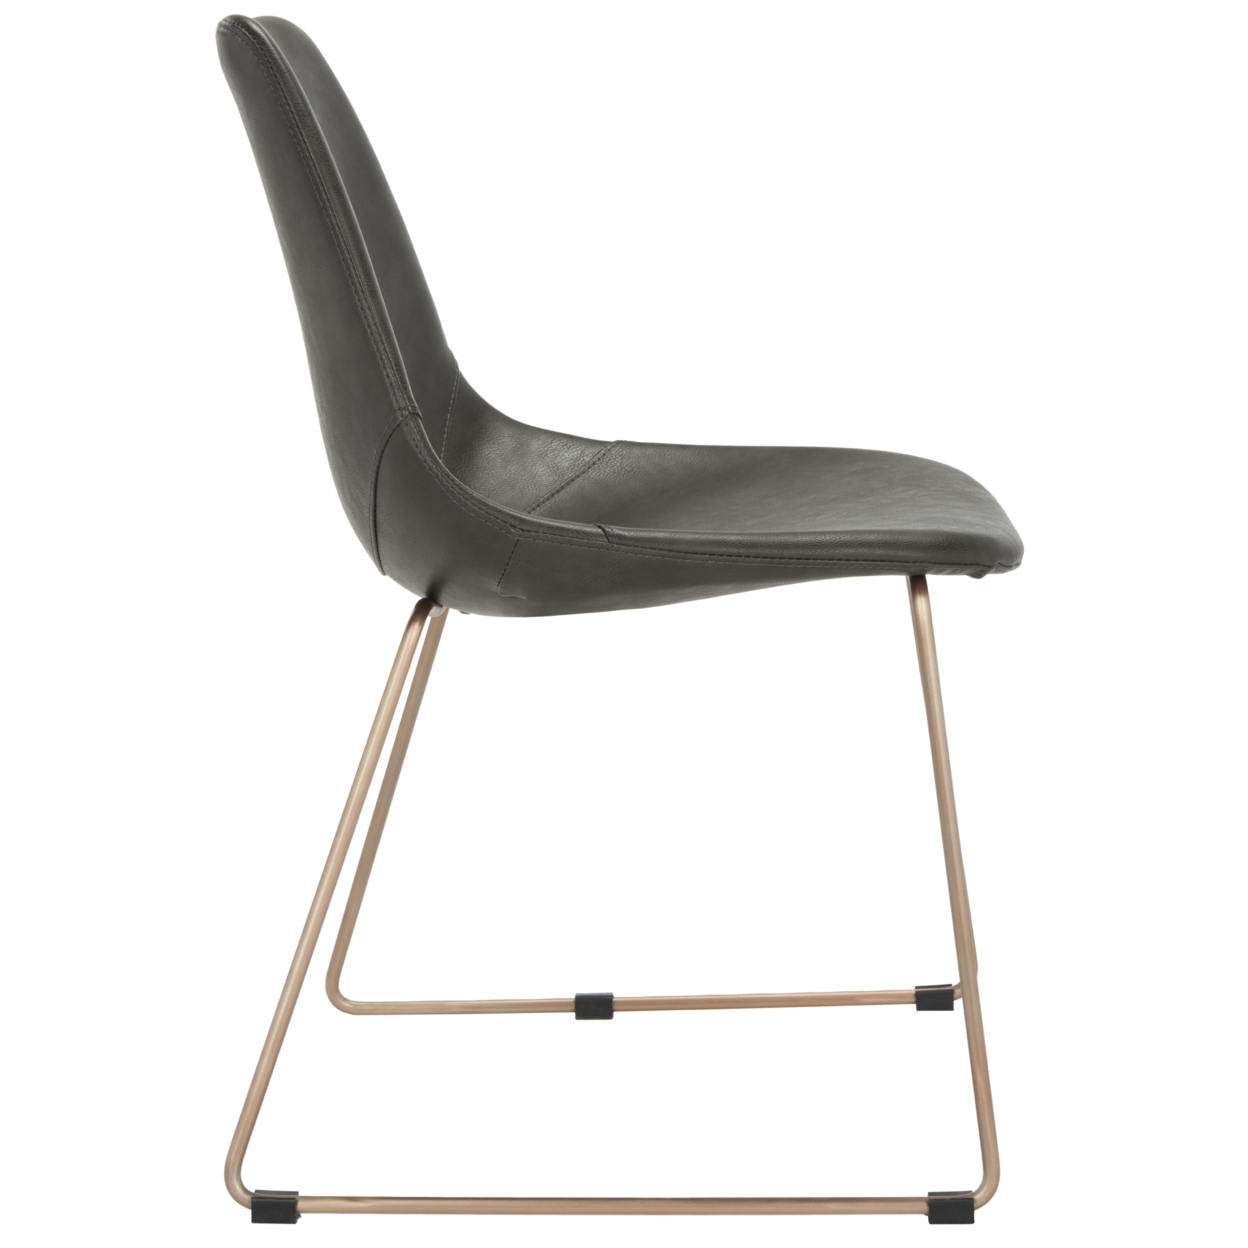 SAFAVIEH Dorian Mid-Century Modern Leather Dining Chair Grey / Copper